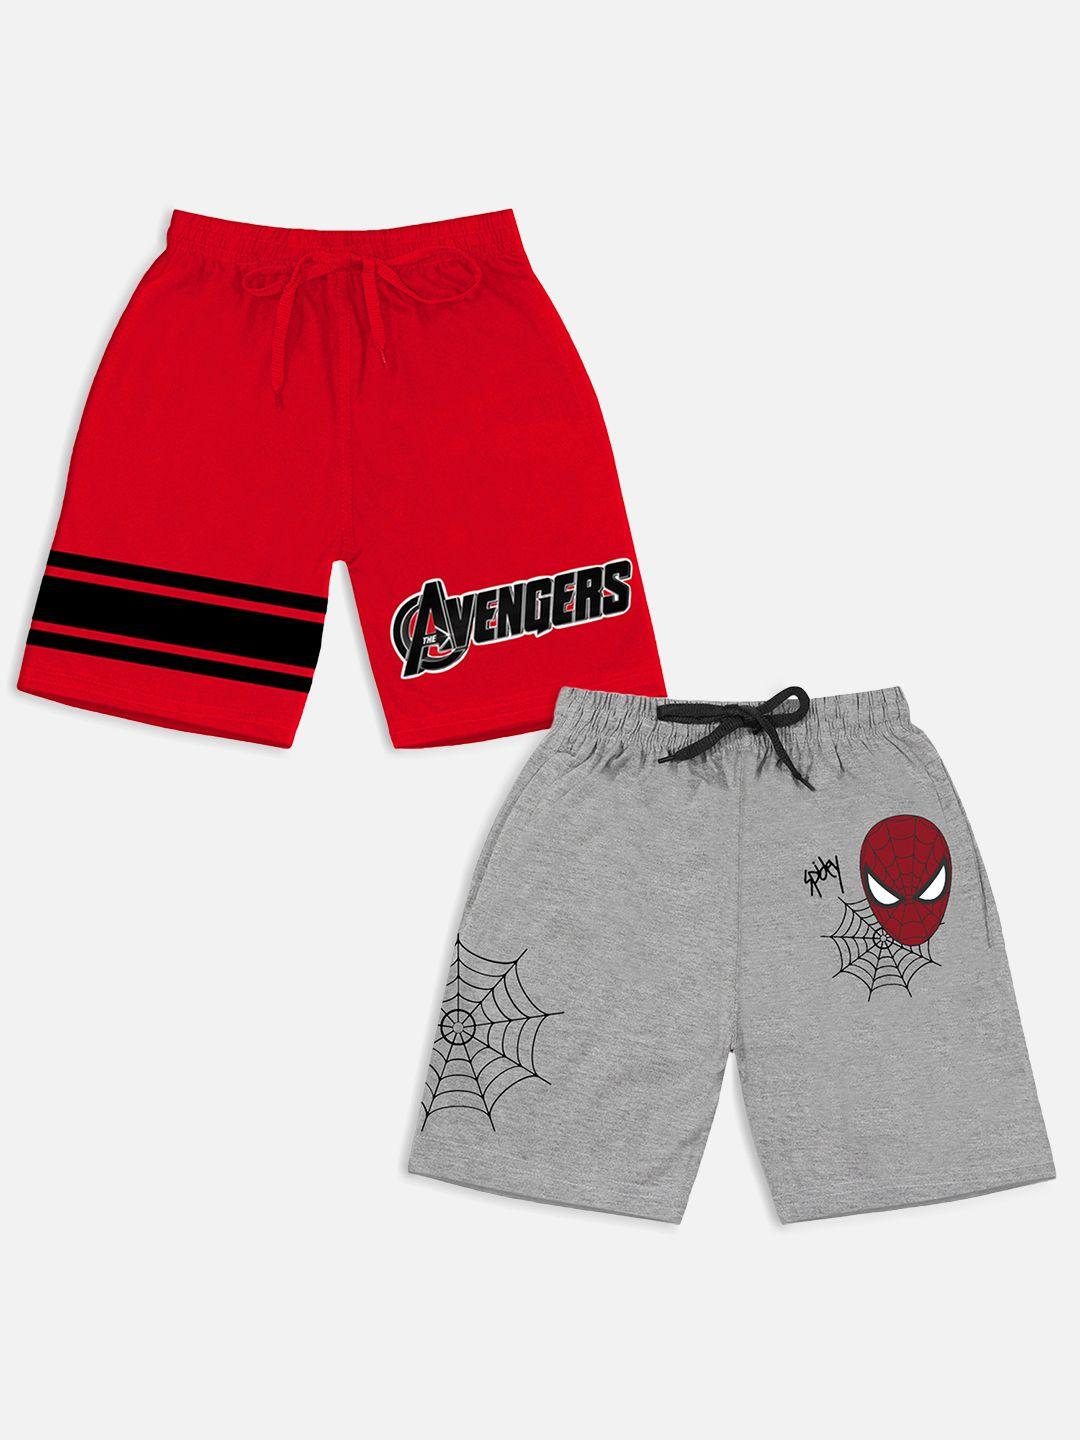 yk marvel pack f 2 kids red & grey melange printed avengers shorts